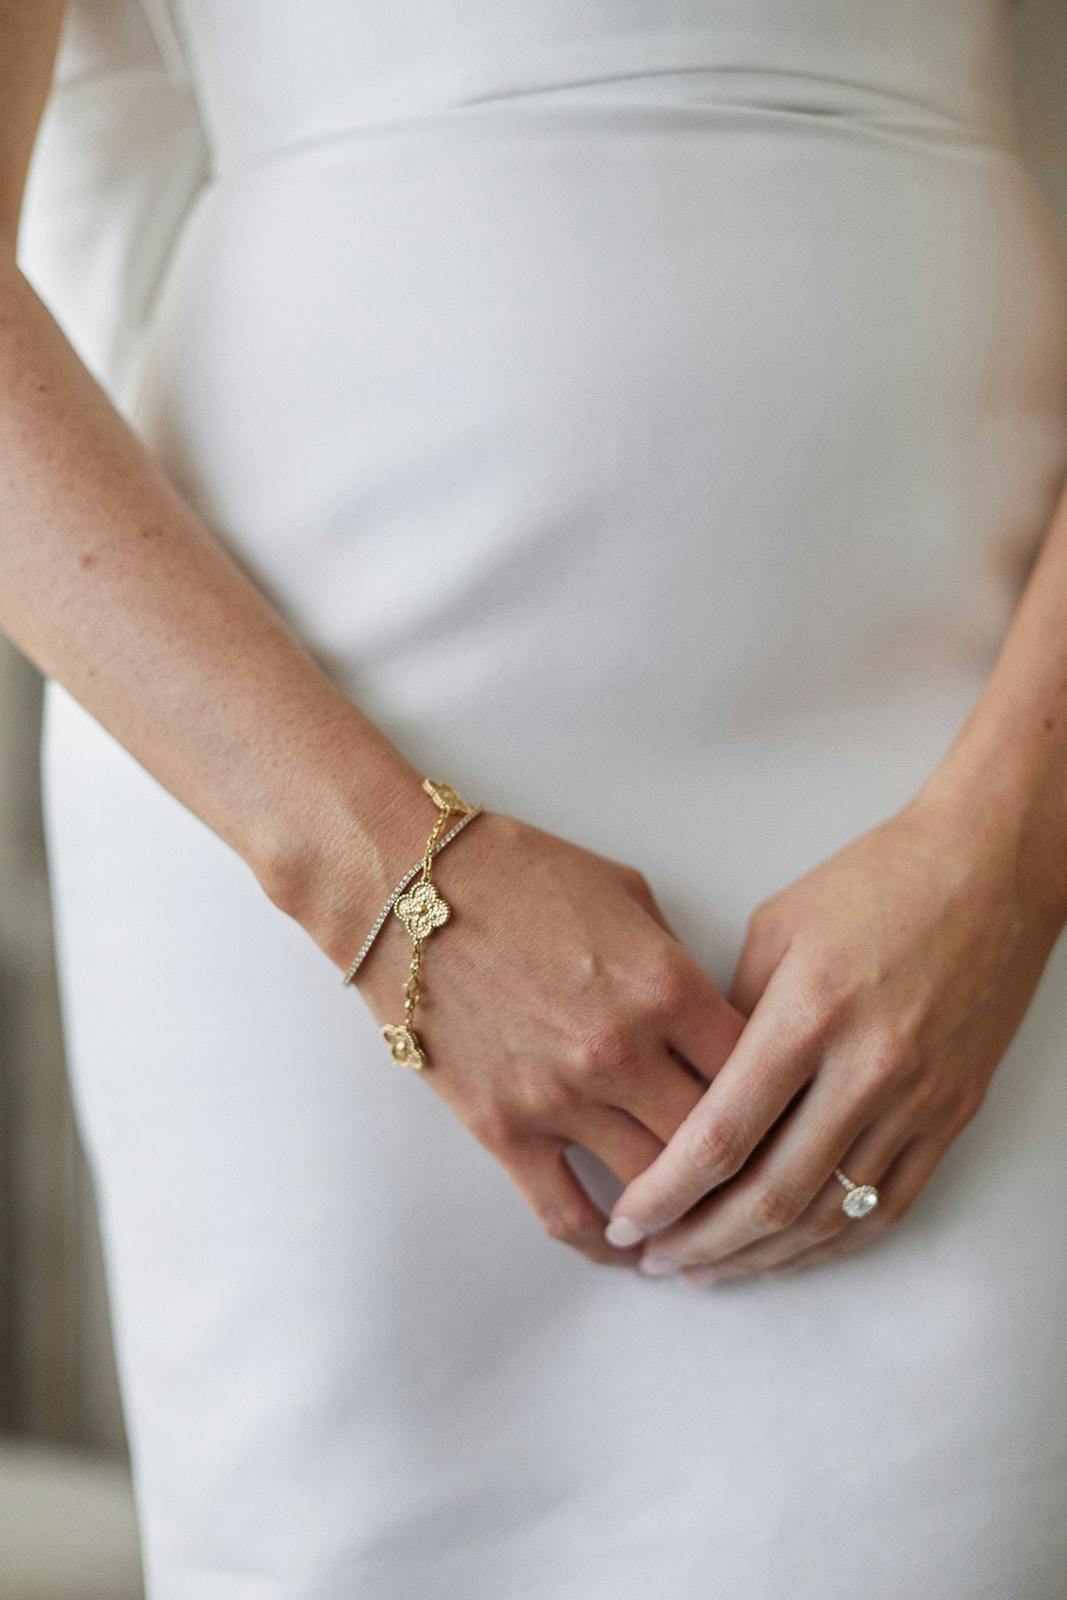 Bride wearing bracelet and wedding ring